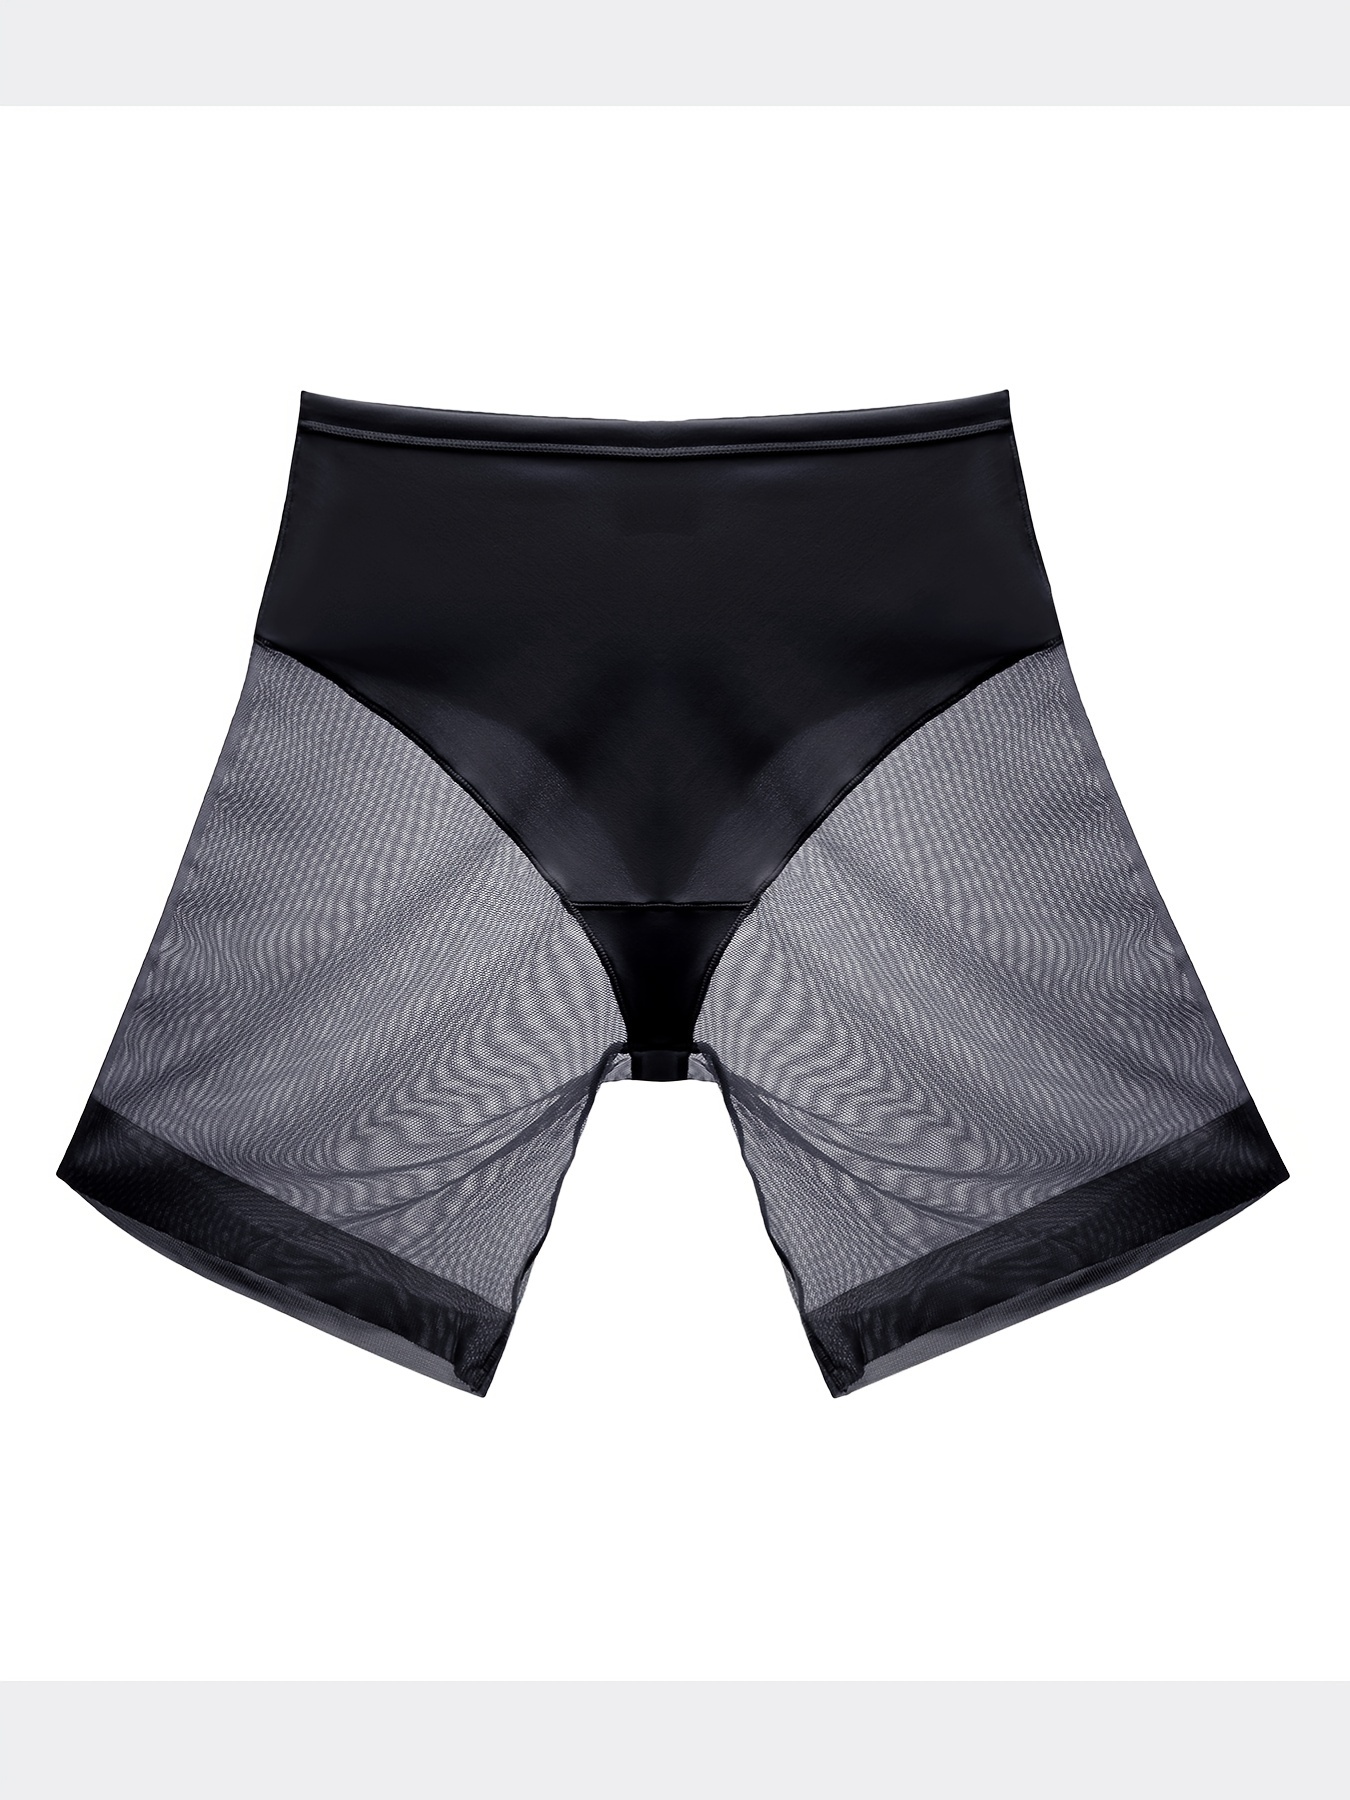 Slip Shorts For Under Dresses Women Seamless Boyshorts Panties Anti Chafing  Underwear Shorts Butt Lifter (Black, M) at  Women's Clothing store